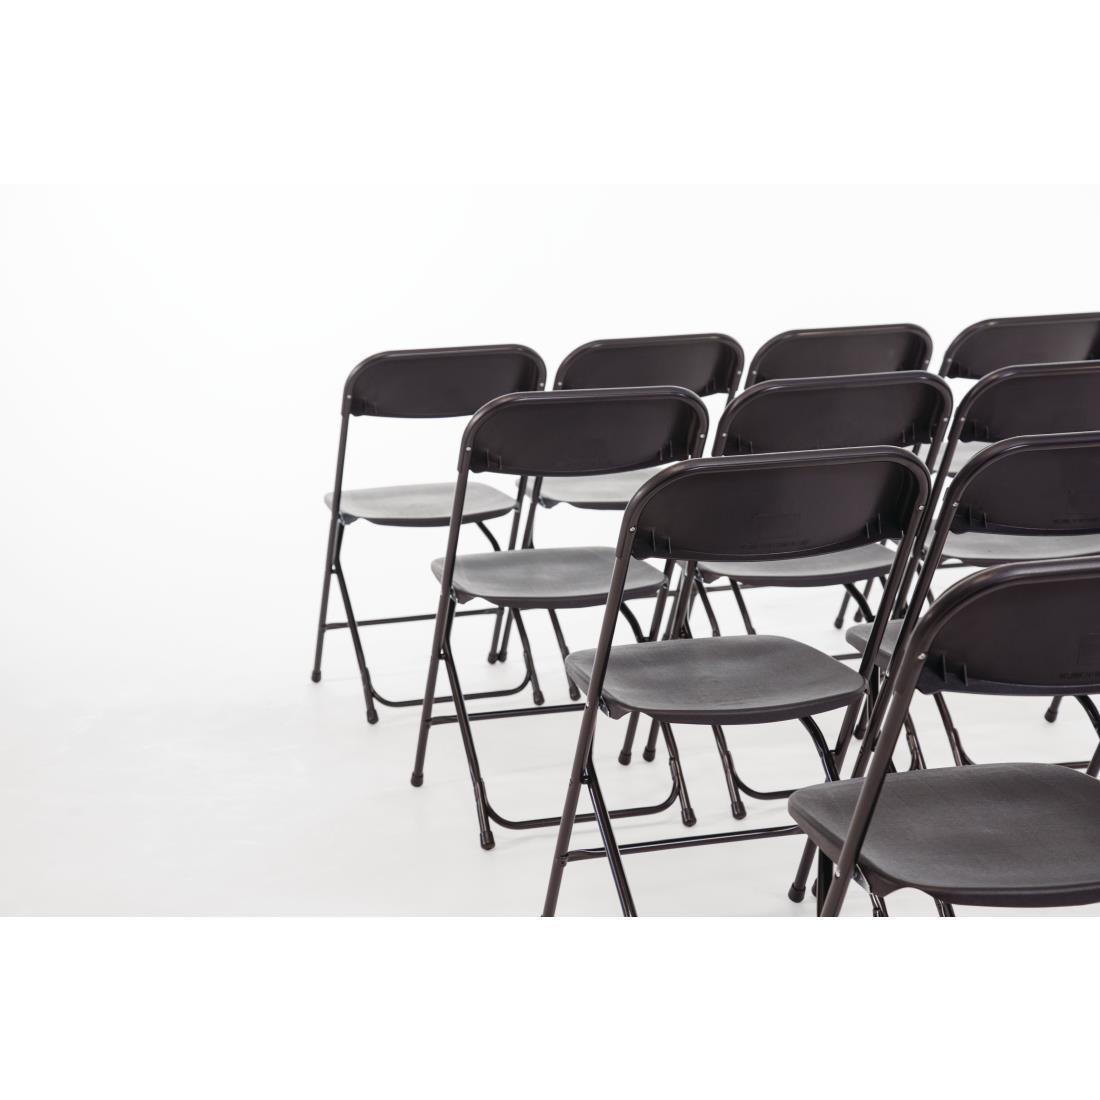 Bolero PP Folding Chairs Black (Pack of 10) - GD386  - 6